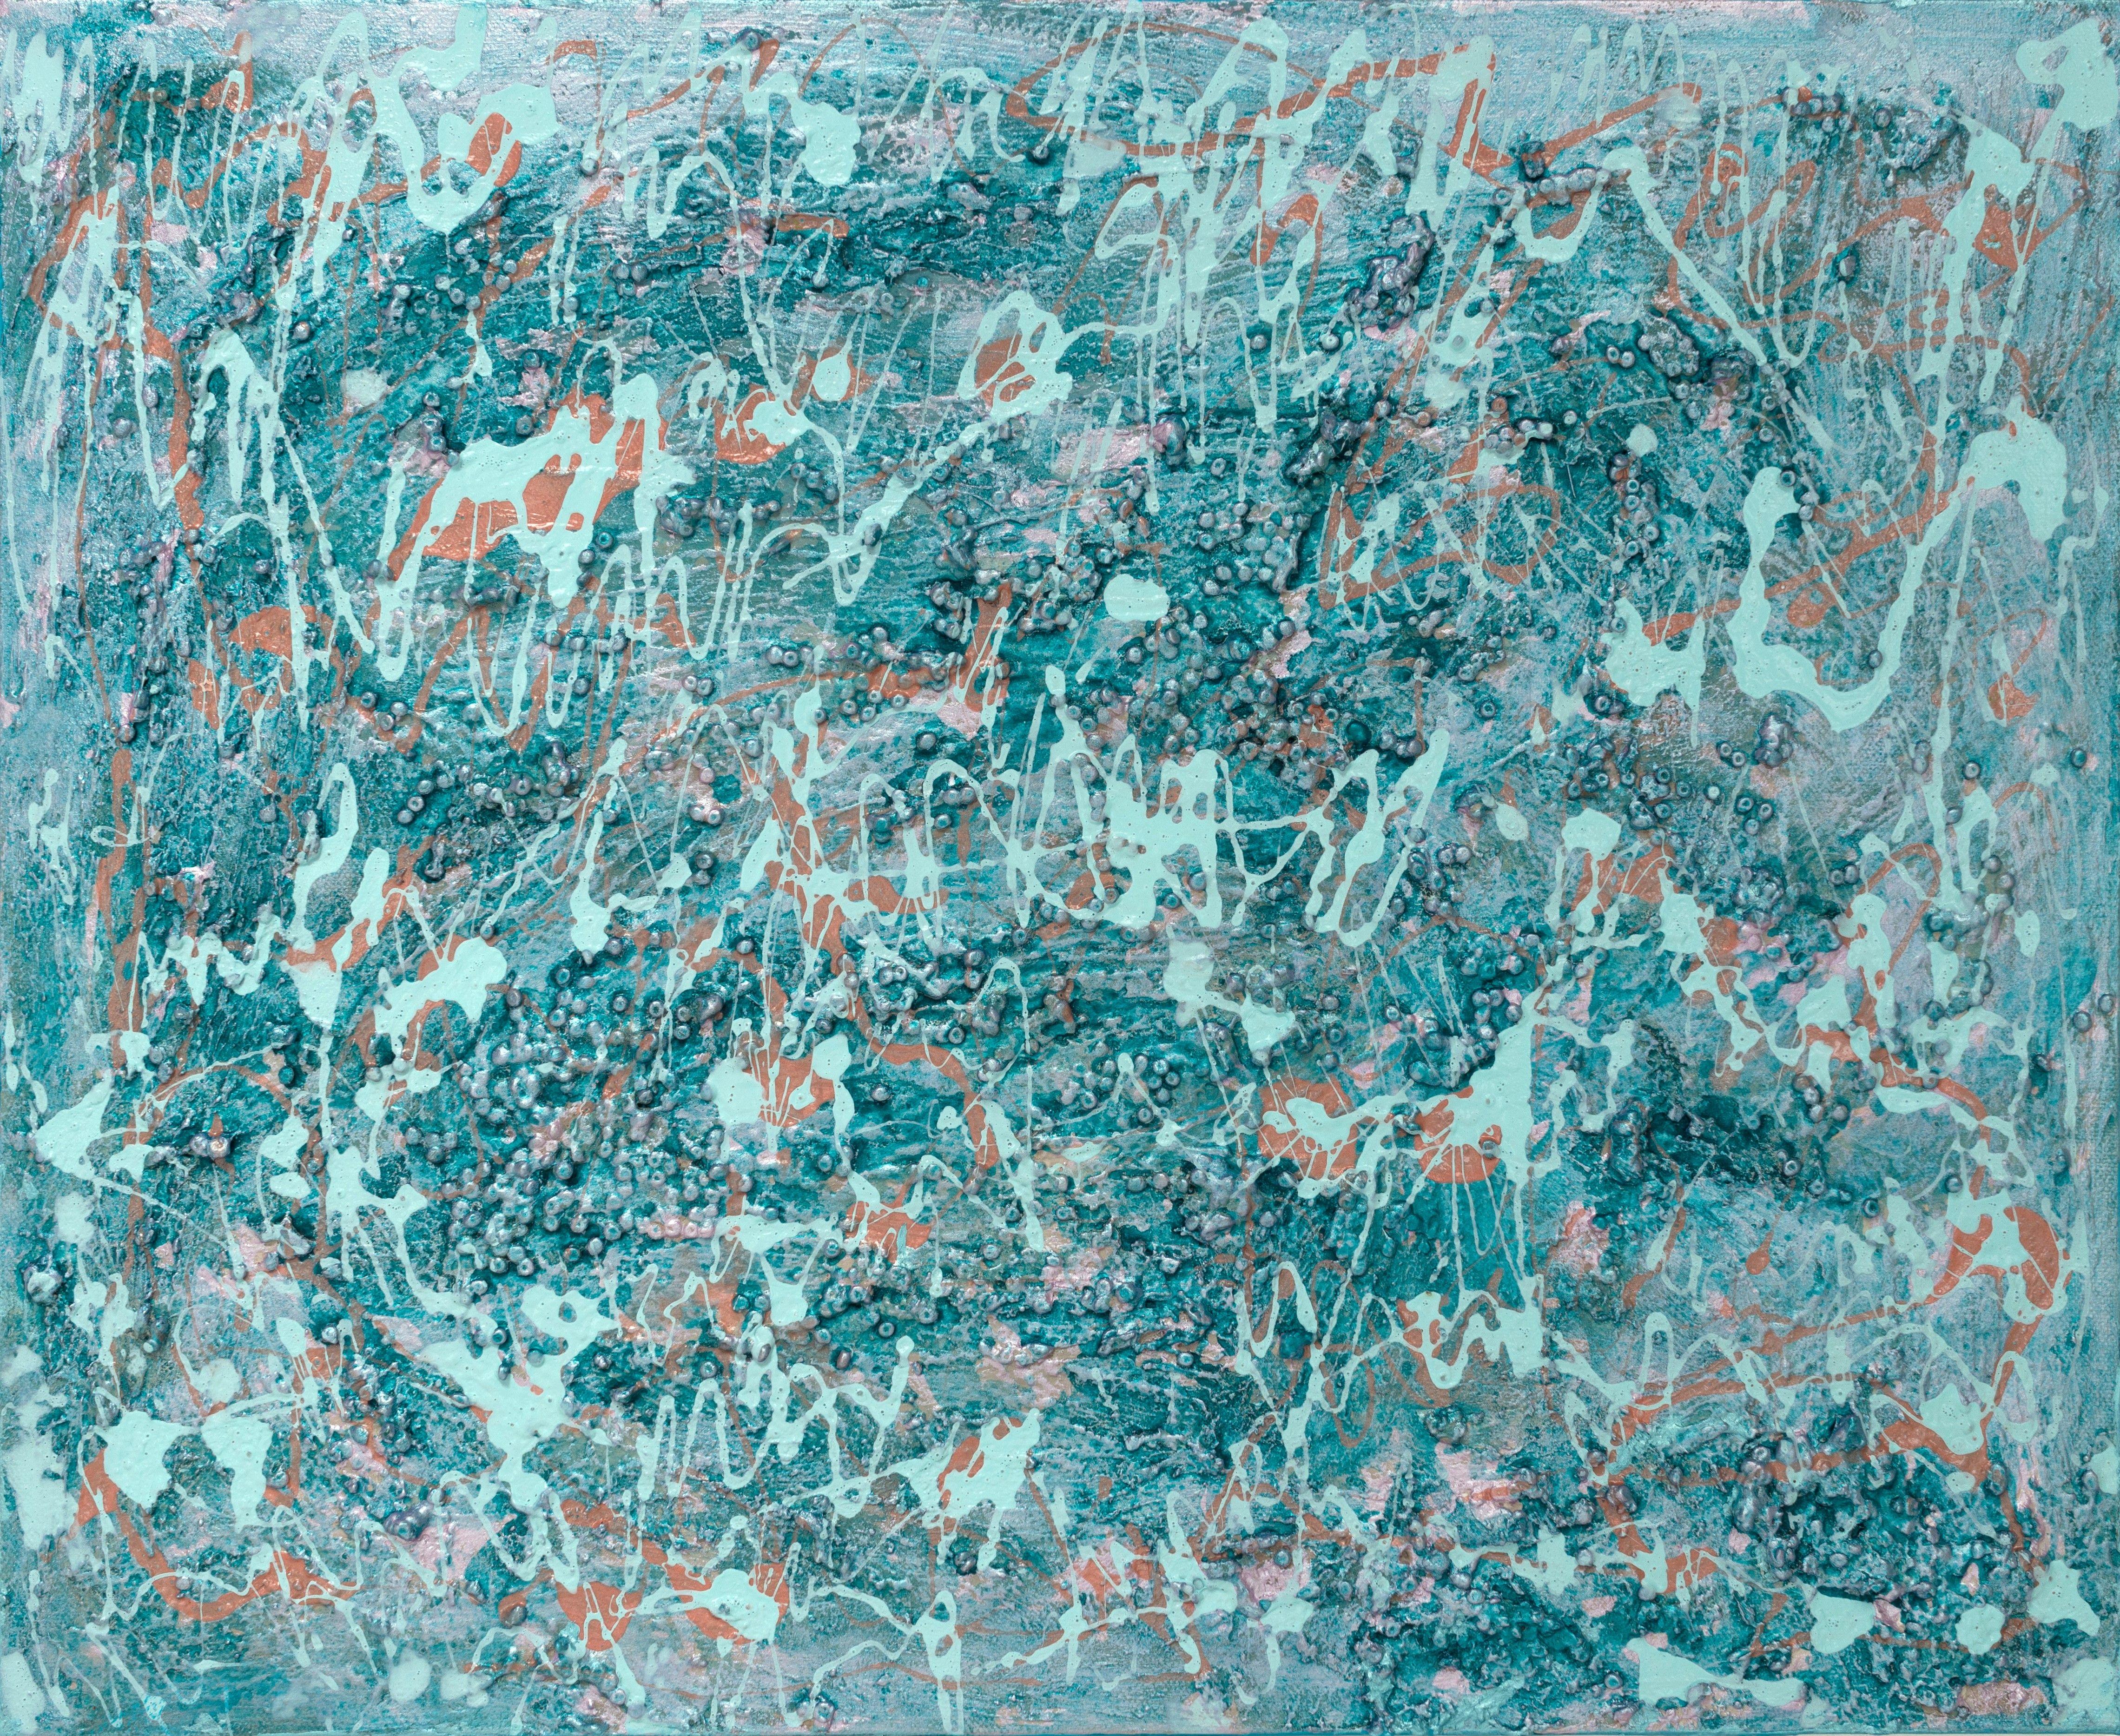 Pamela Rys Abstract Painting – Wrinkle in Space-Time, Gemälde, Acryl auf Leinwand